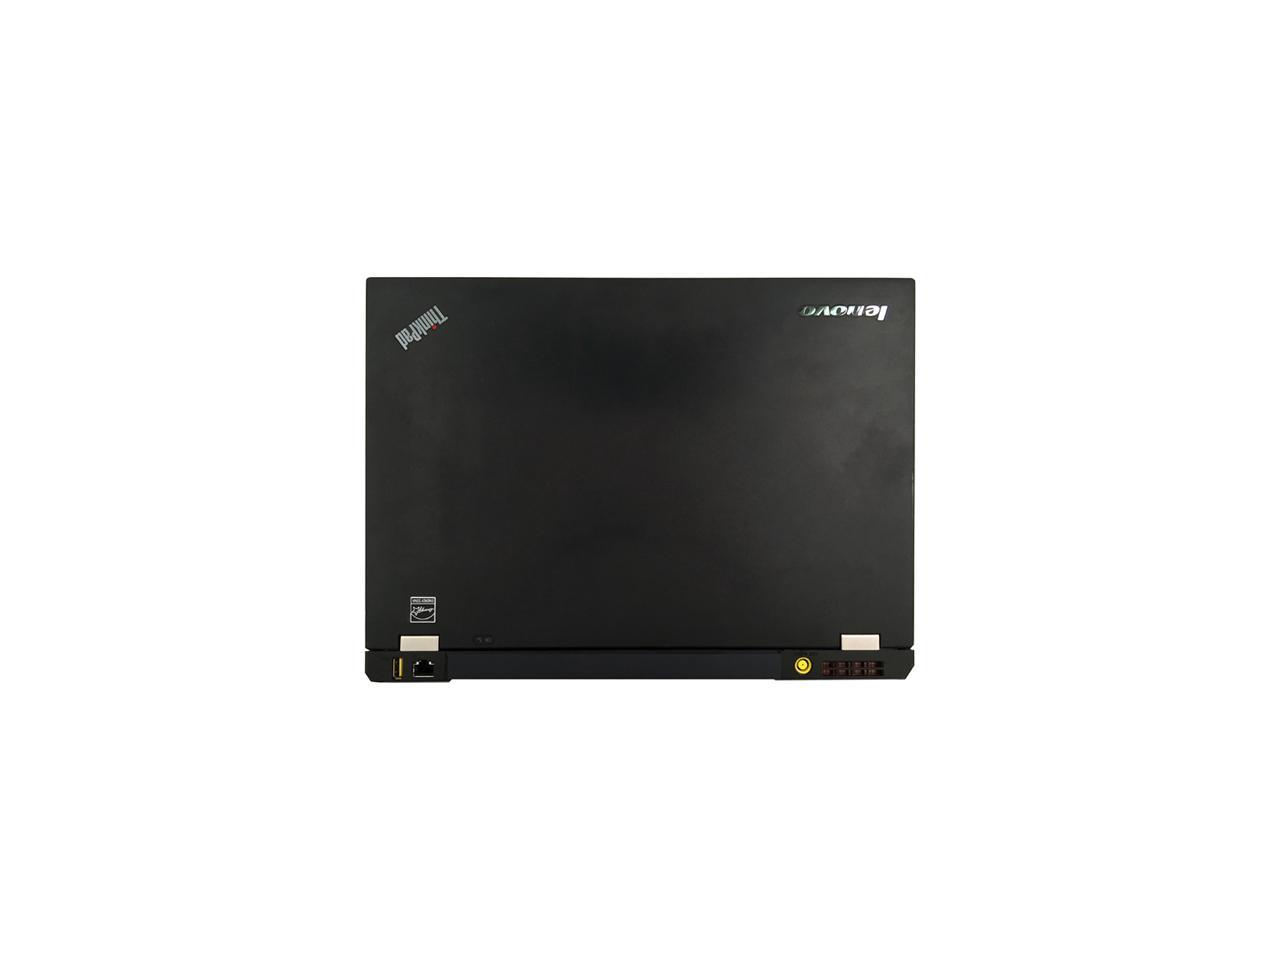 Refurbished Lenovo ThinkPad T430 14.0" Intel Core i5-3320M 2.6GHz 4GB DDR3 320GB DVD Windows 10 Professional 64 Bits 1 Year Warranty